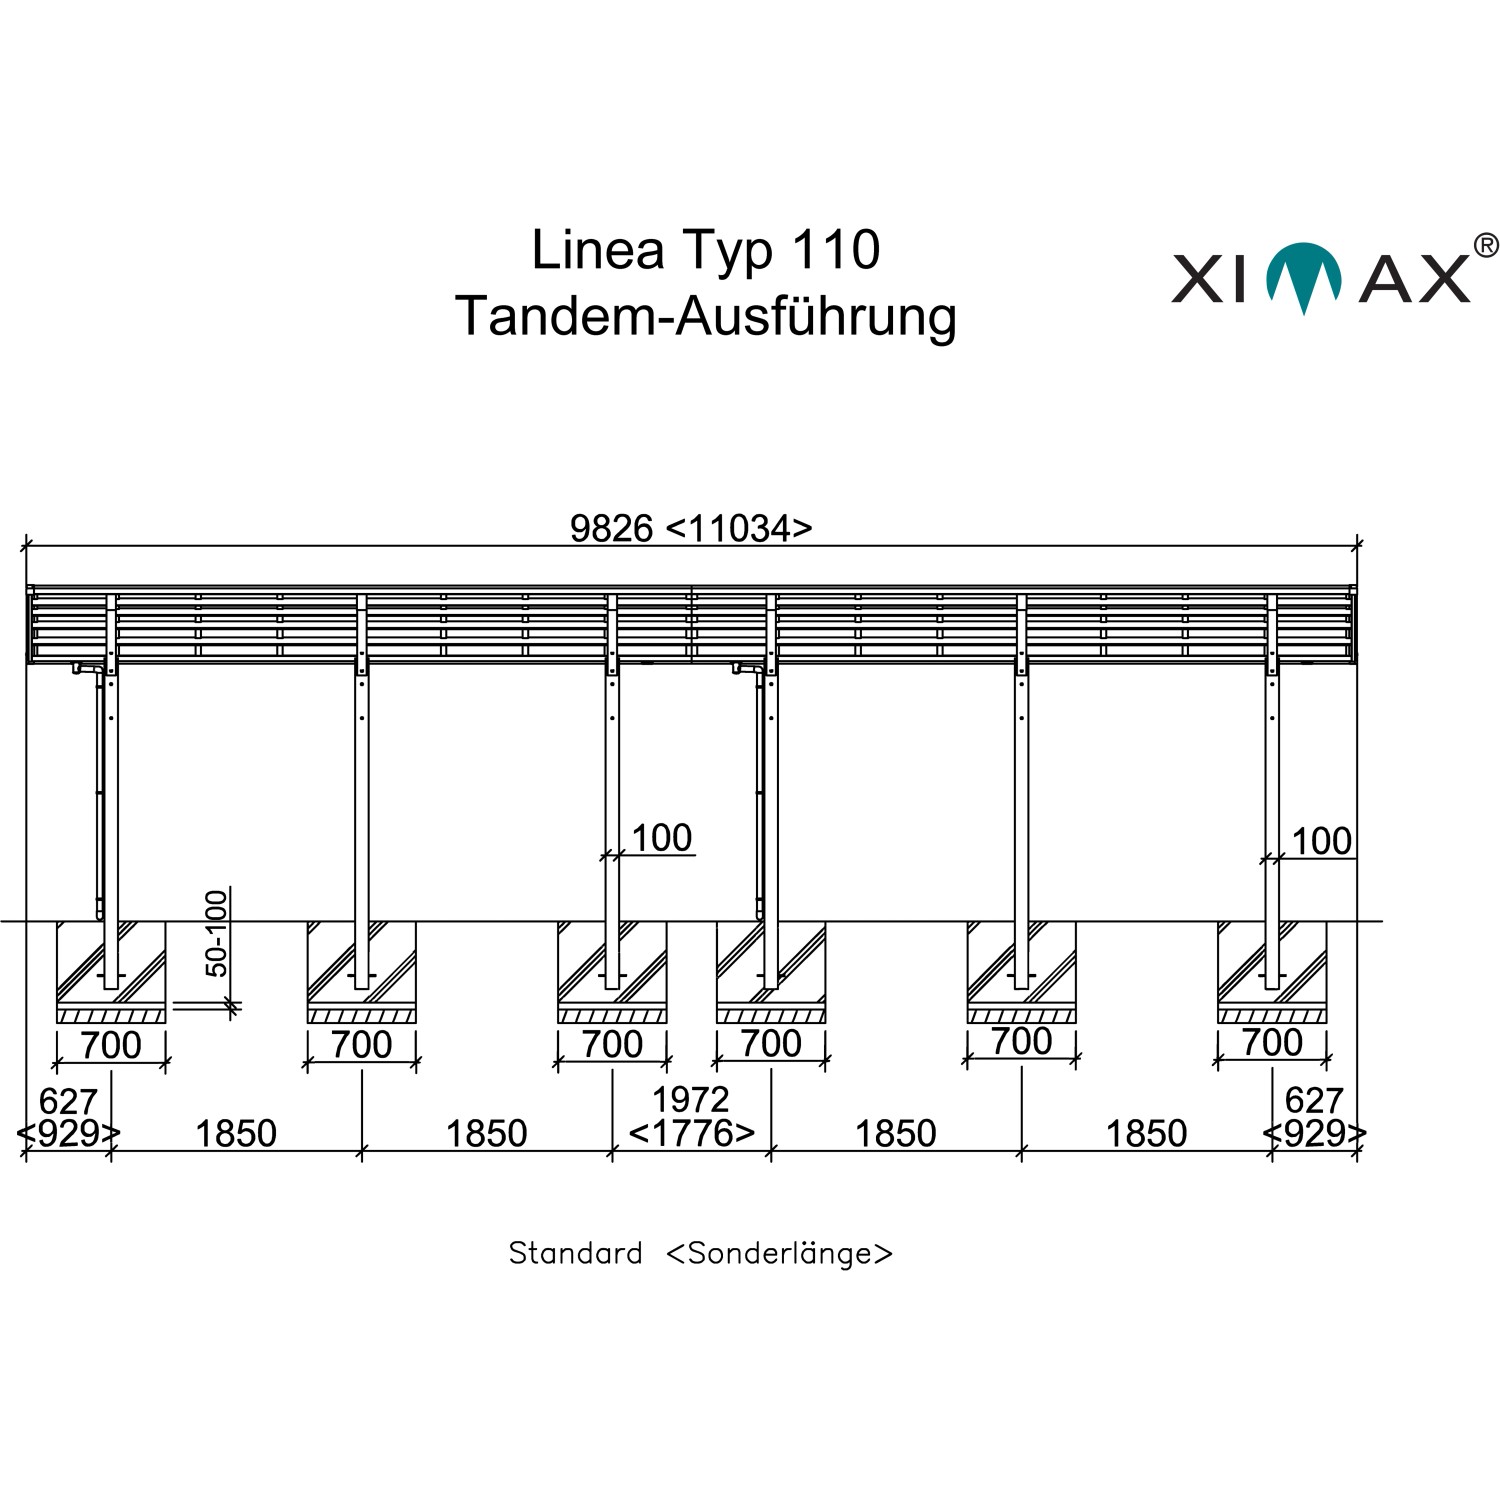 Ximax Alu Doppelcarport Linea Tandem 110 bei Bronze kaufen 983 cm Sonderfertigung x Typ 273 OBI